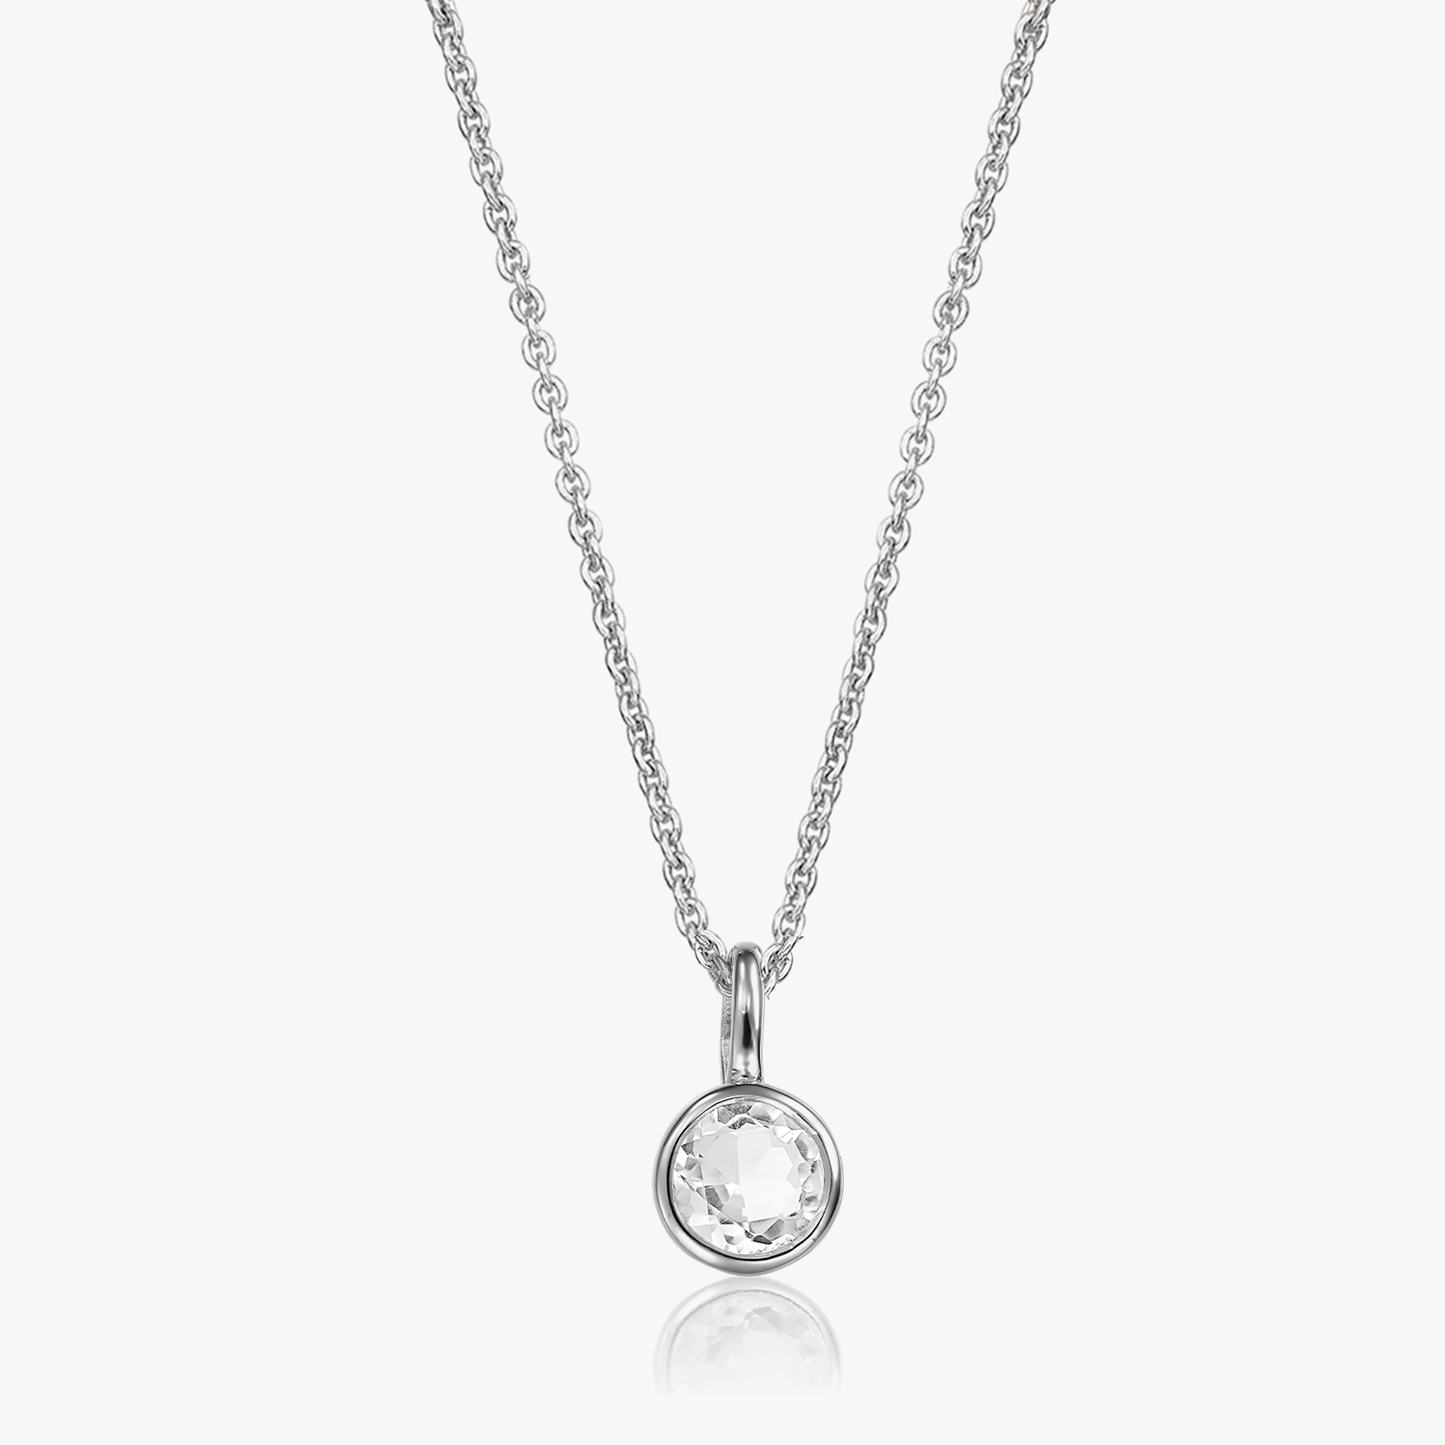 Birthstone April silver necklace - White Topaz